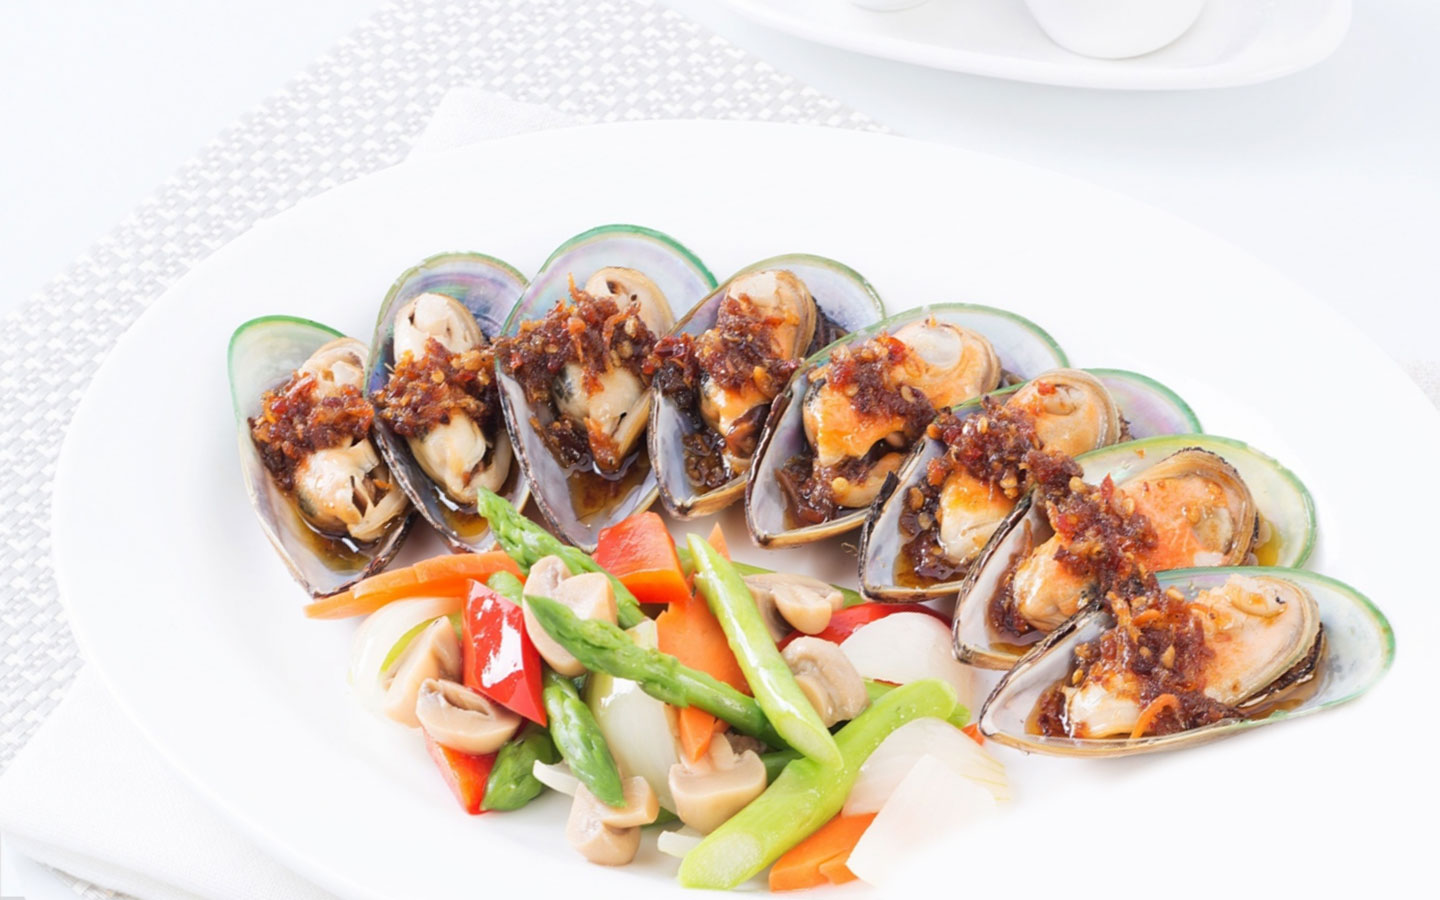 mussels xo sauce shingyang restaurant